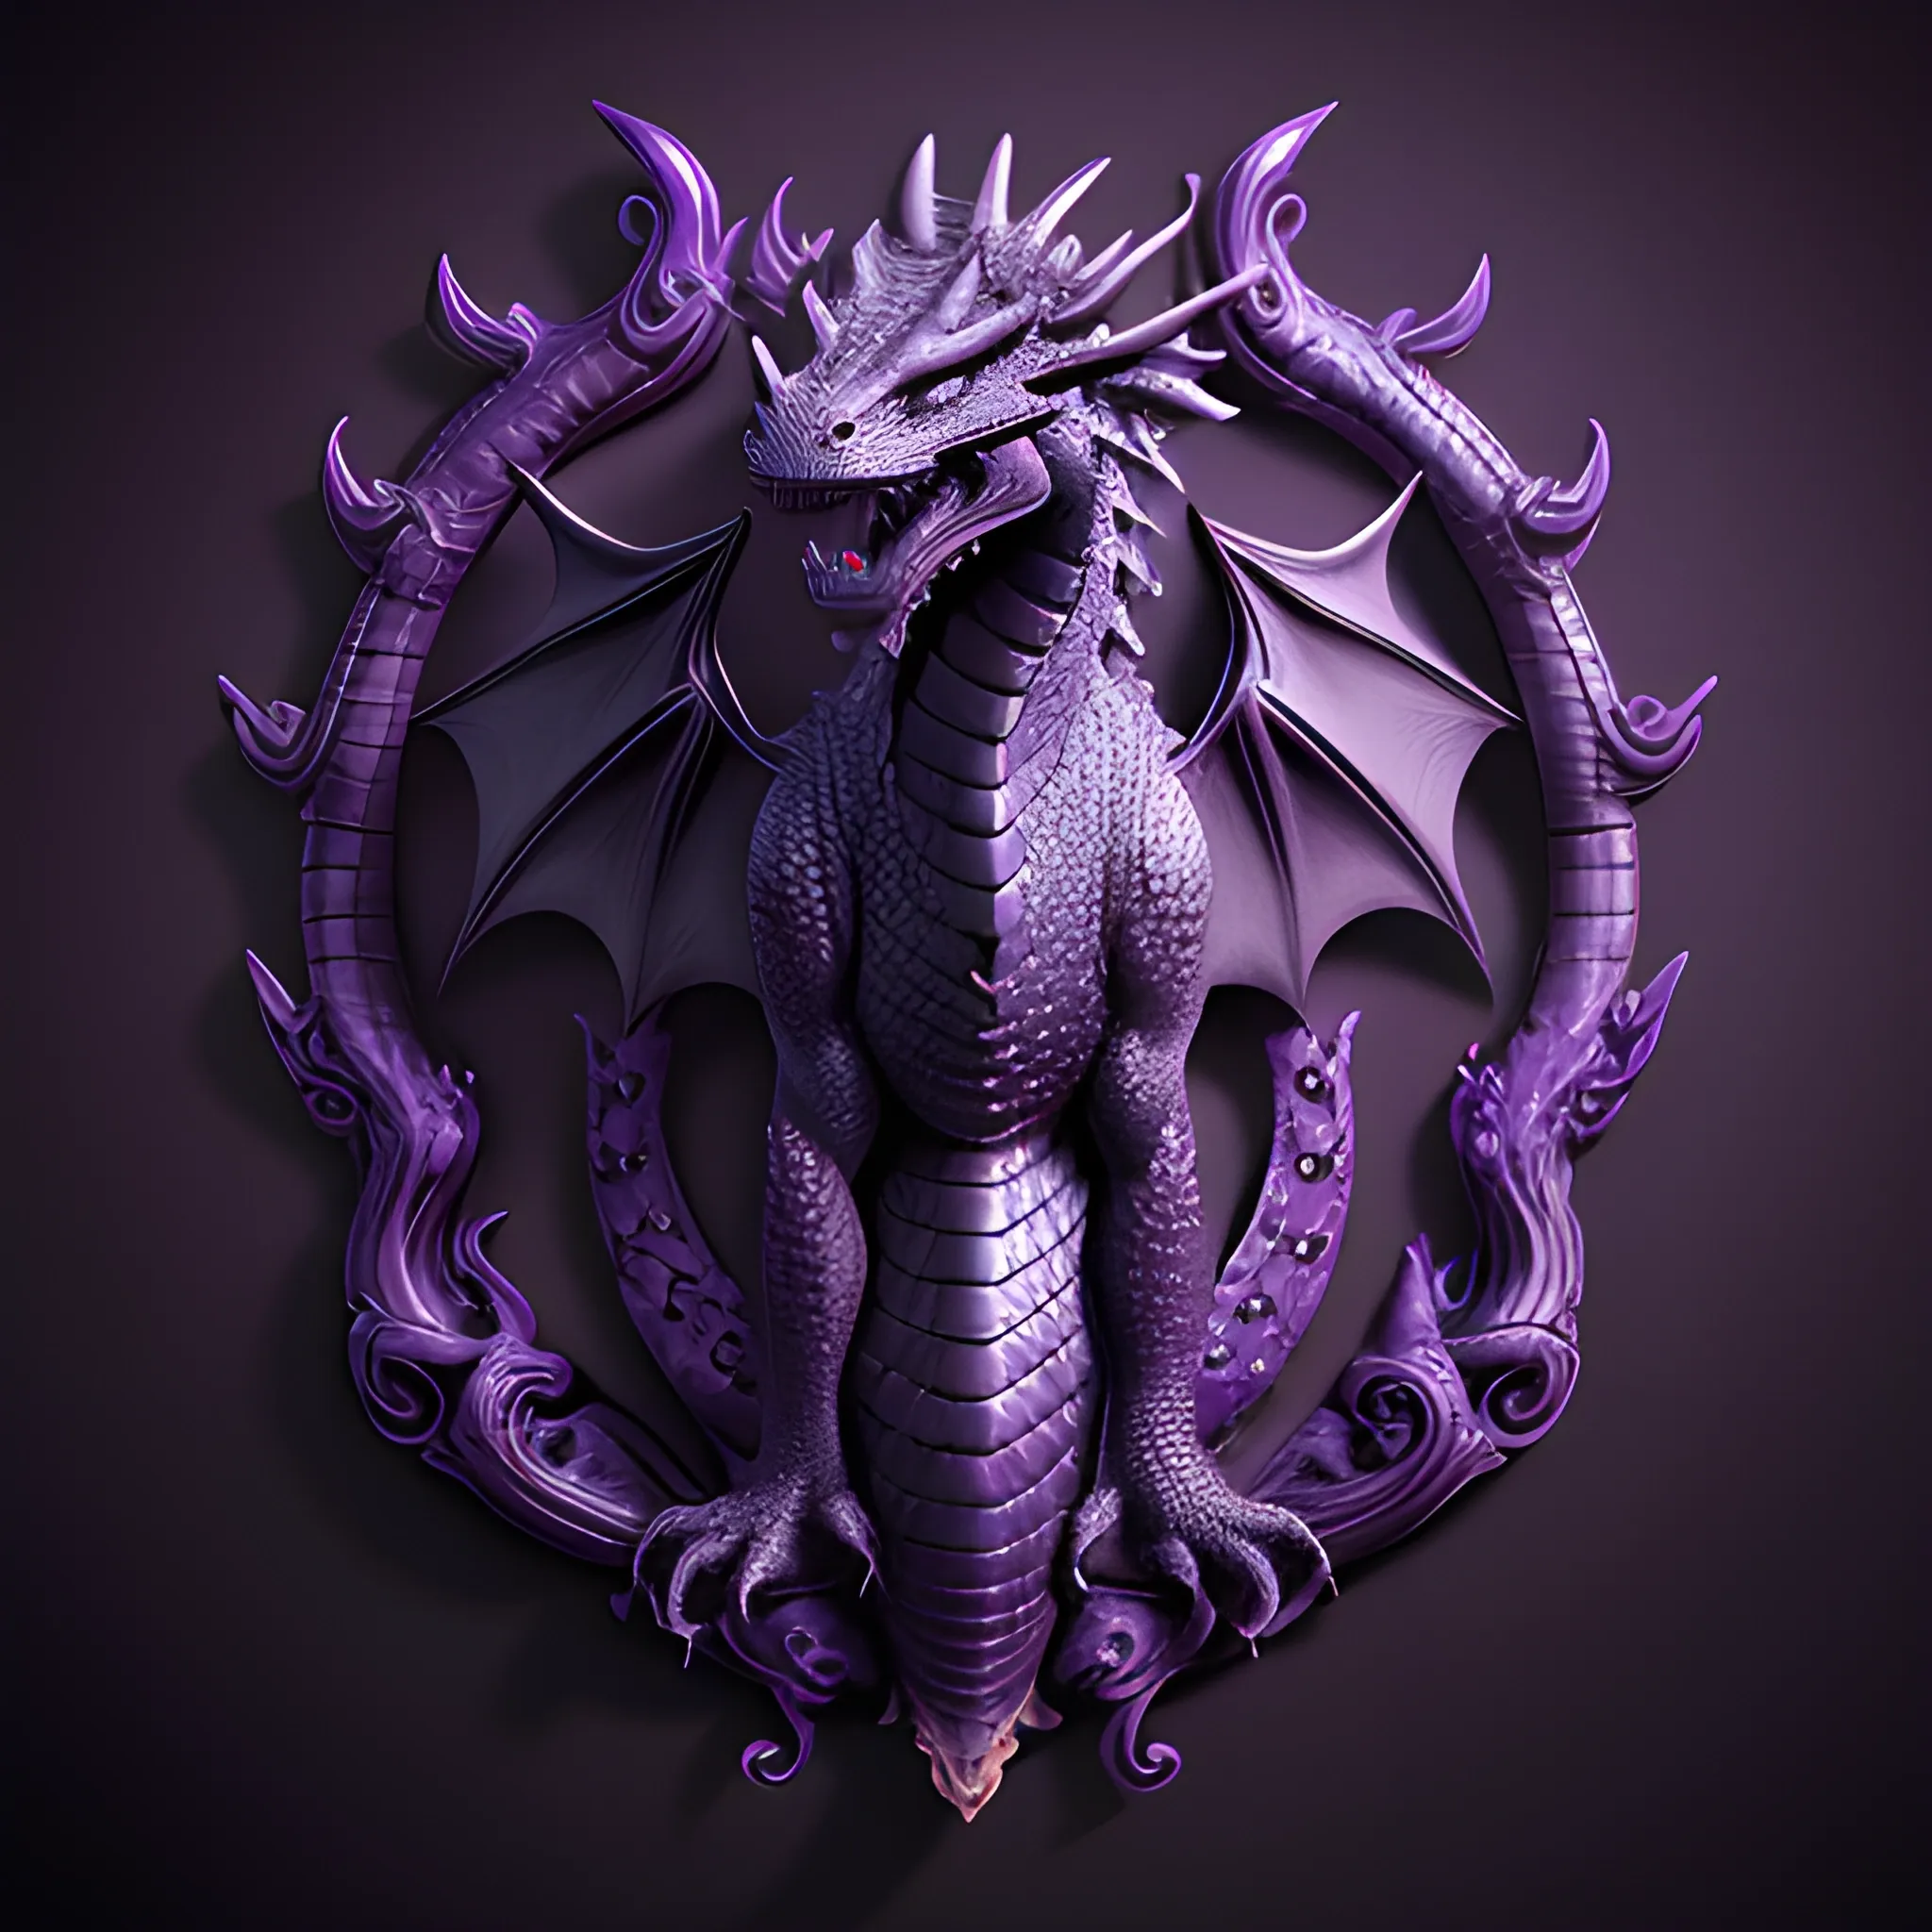 Dragon purple on a black background, logo, black background, digital art, highly detailed, fine detail, intricate, ornate, complex, octane render, unreal engine, photorealistic , Trippy
